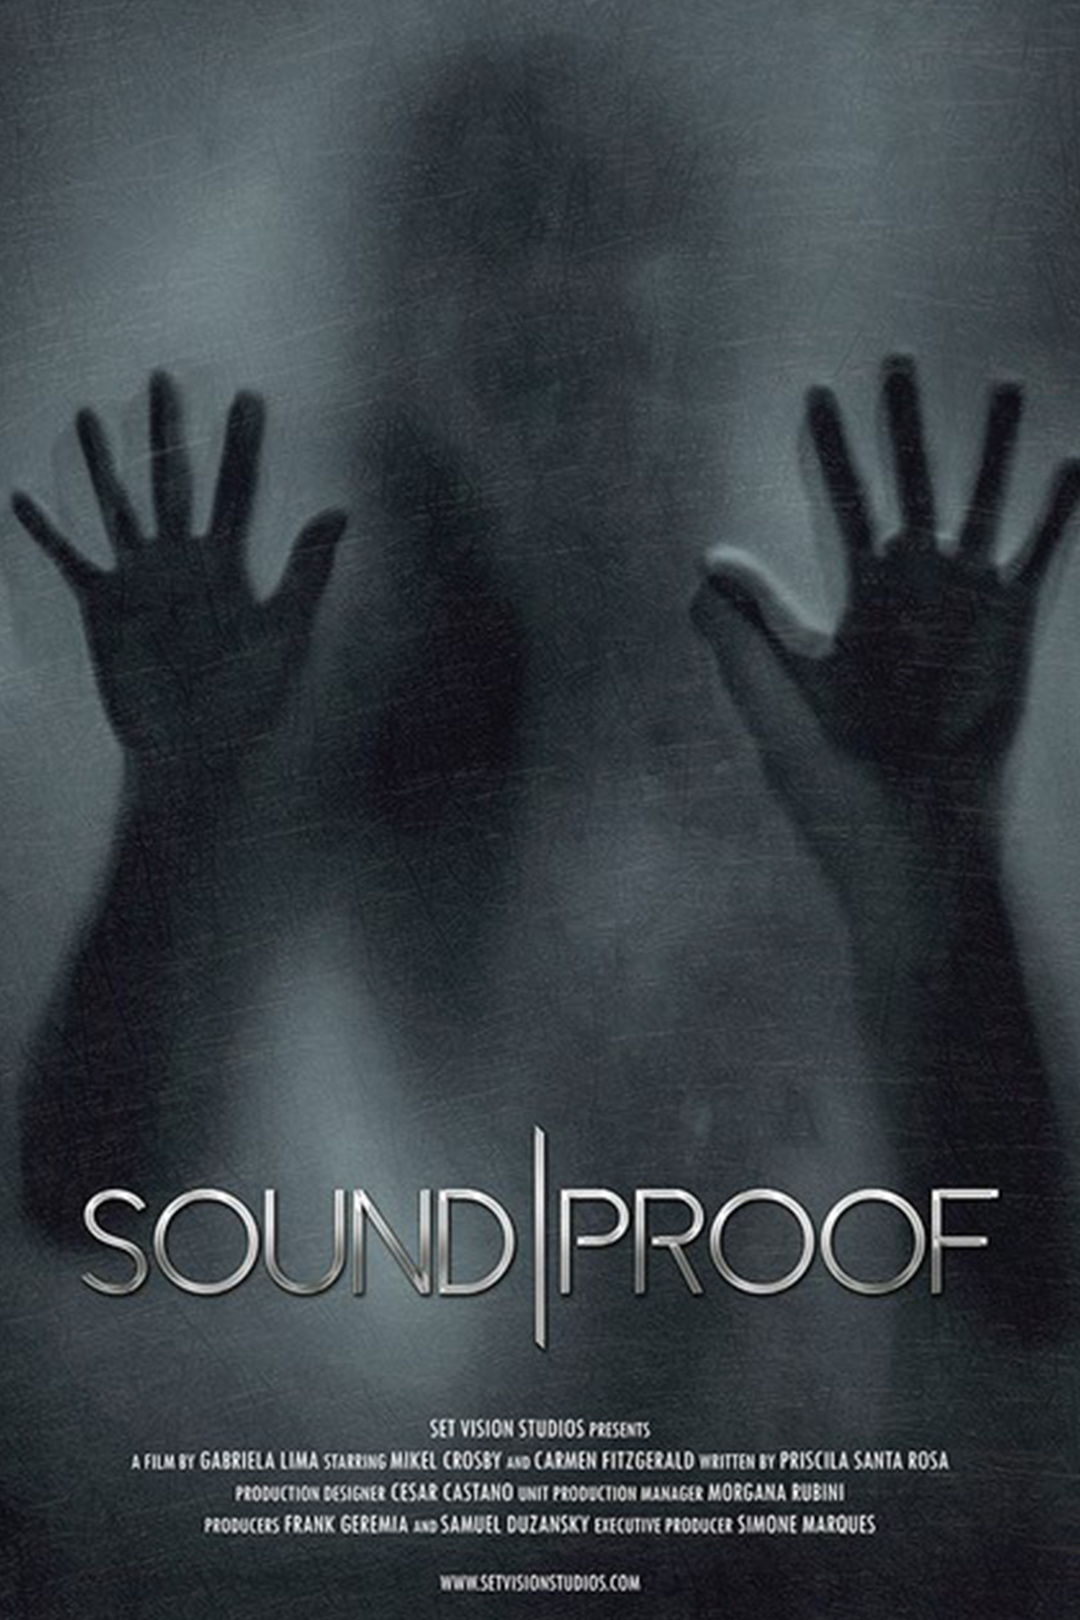 soundproof poster - Gabriela Lima